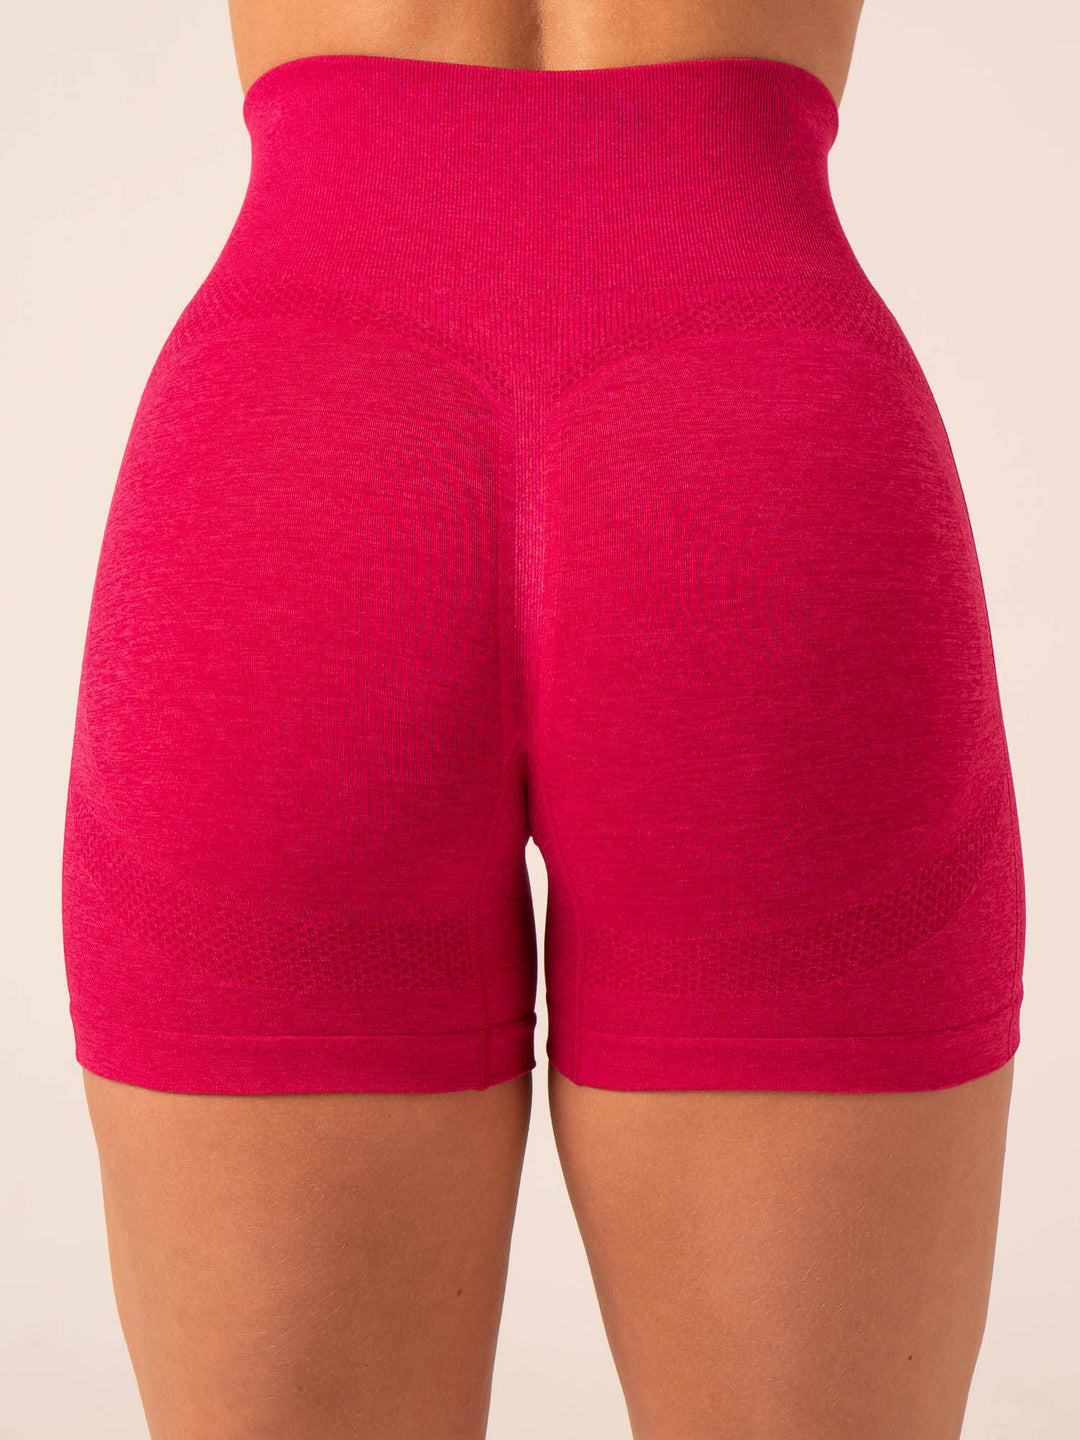 Evolve Seamless Shorts - Berry Marl Clothing Ryderwear 